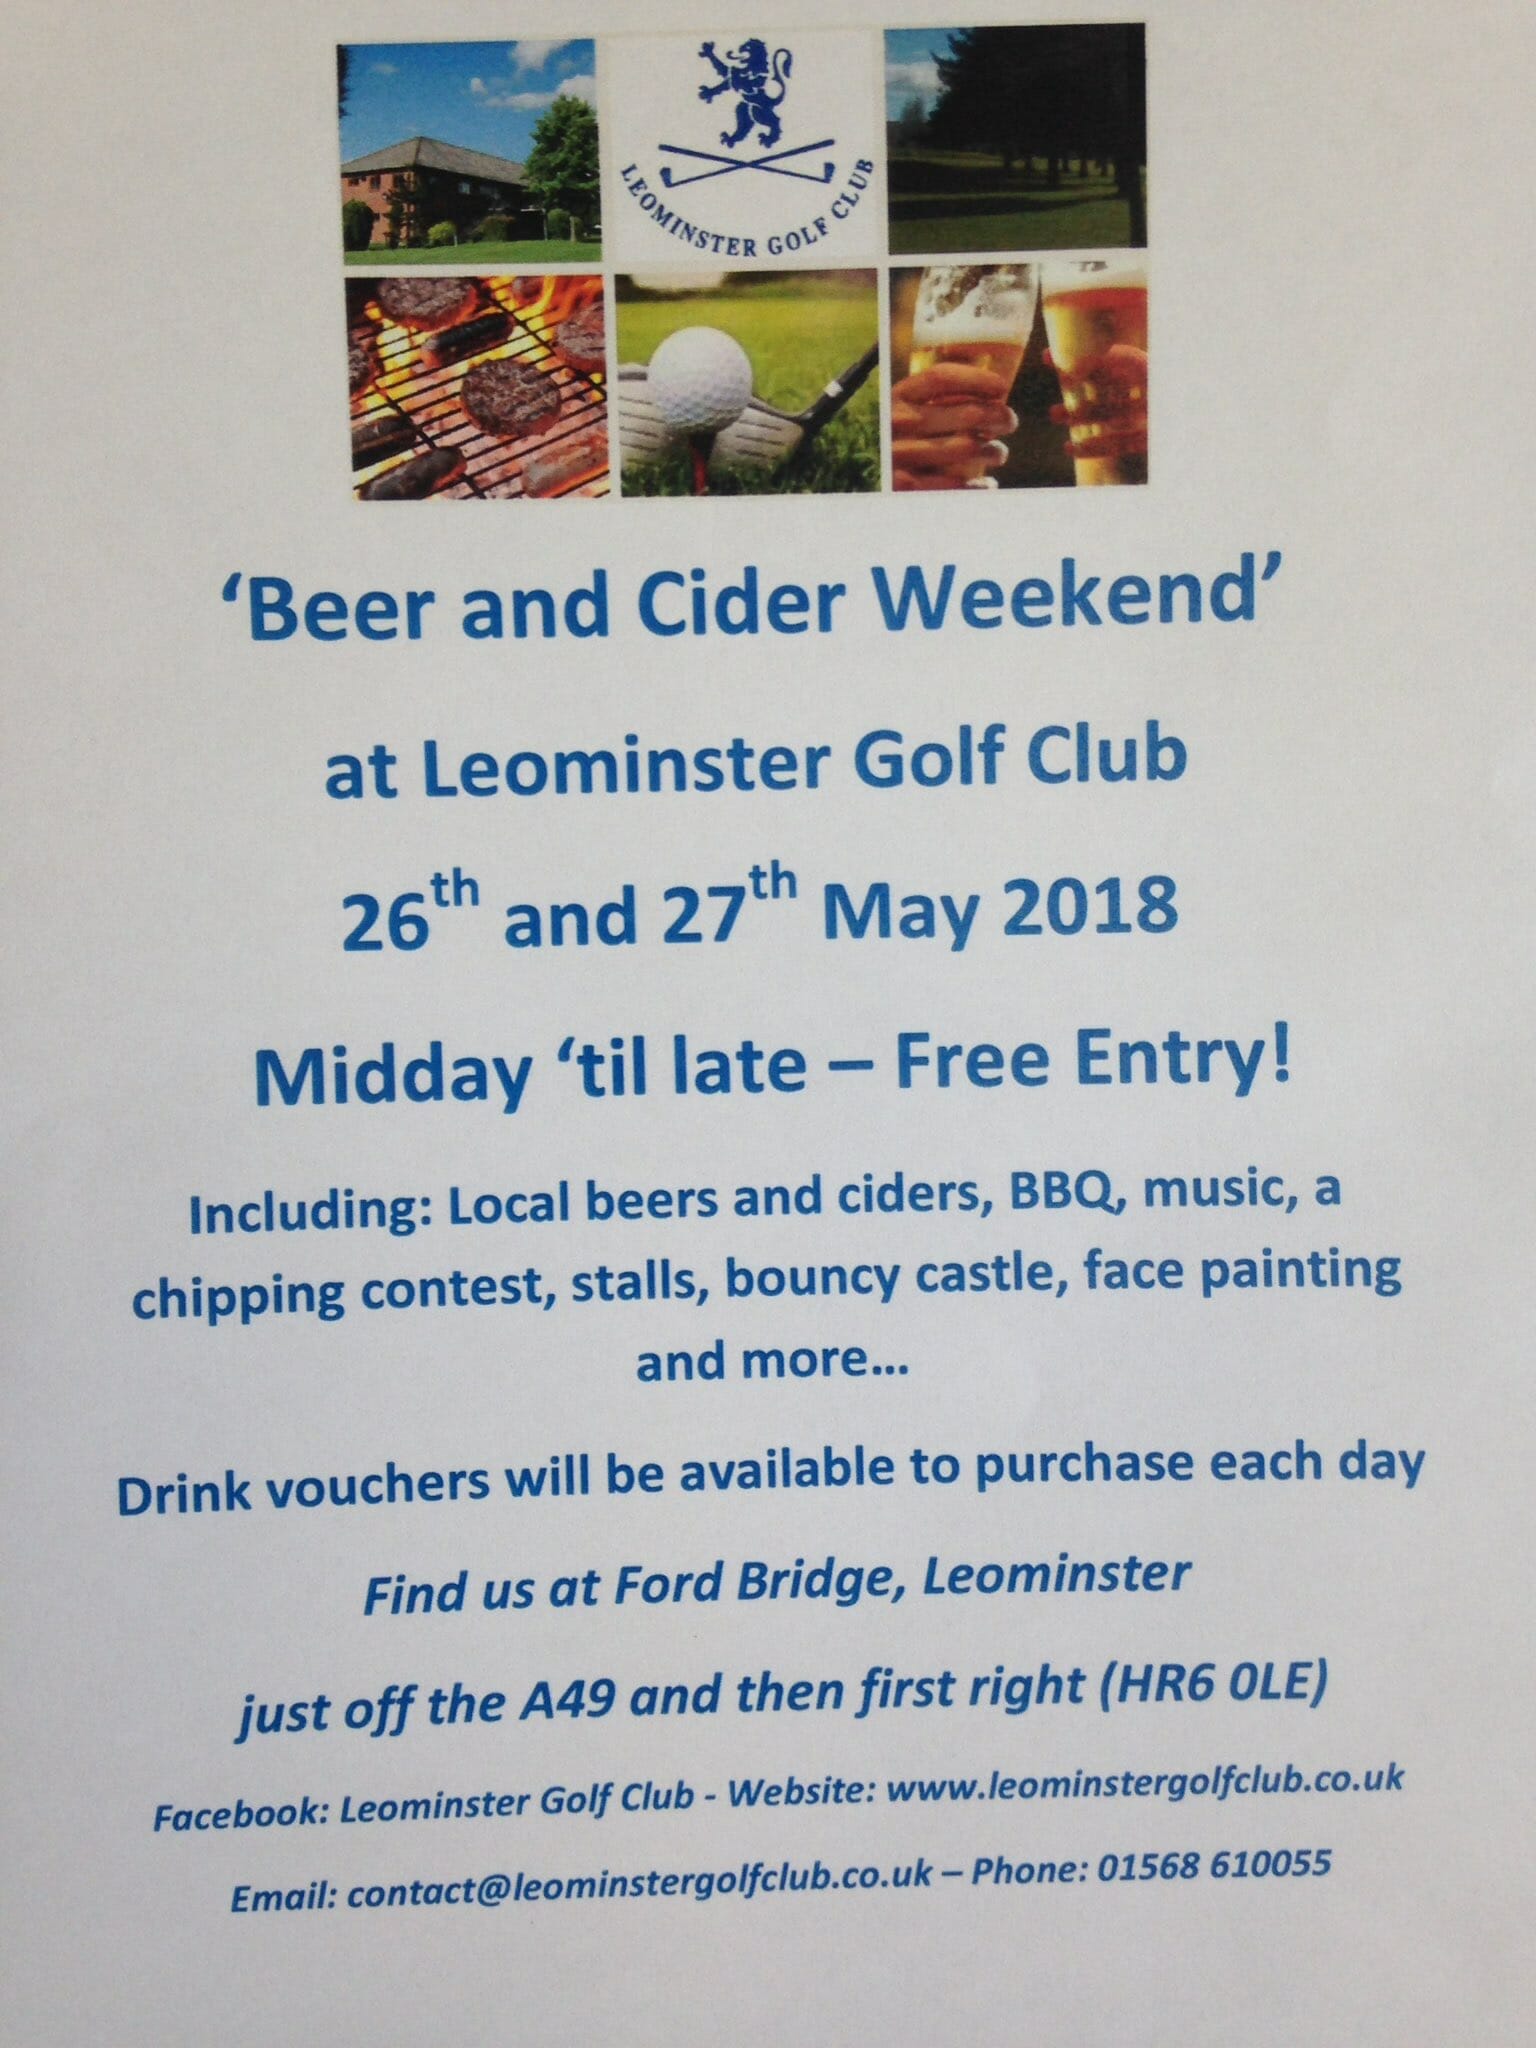 Beer & Cider Weekend at Leominster Golf Club